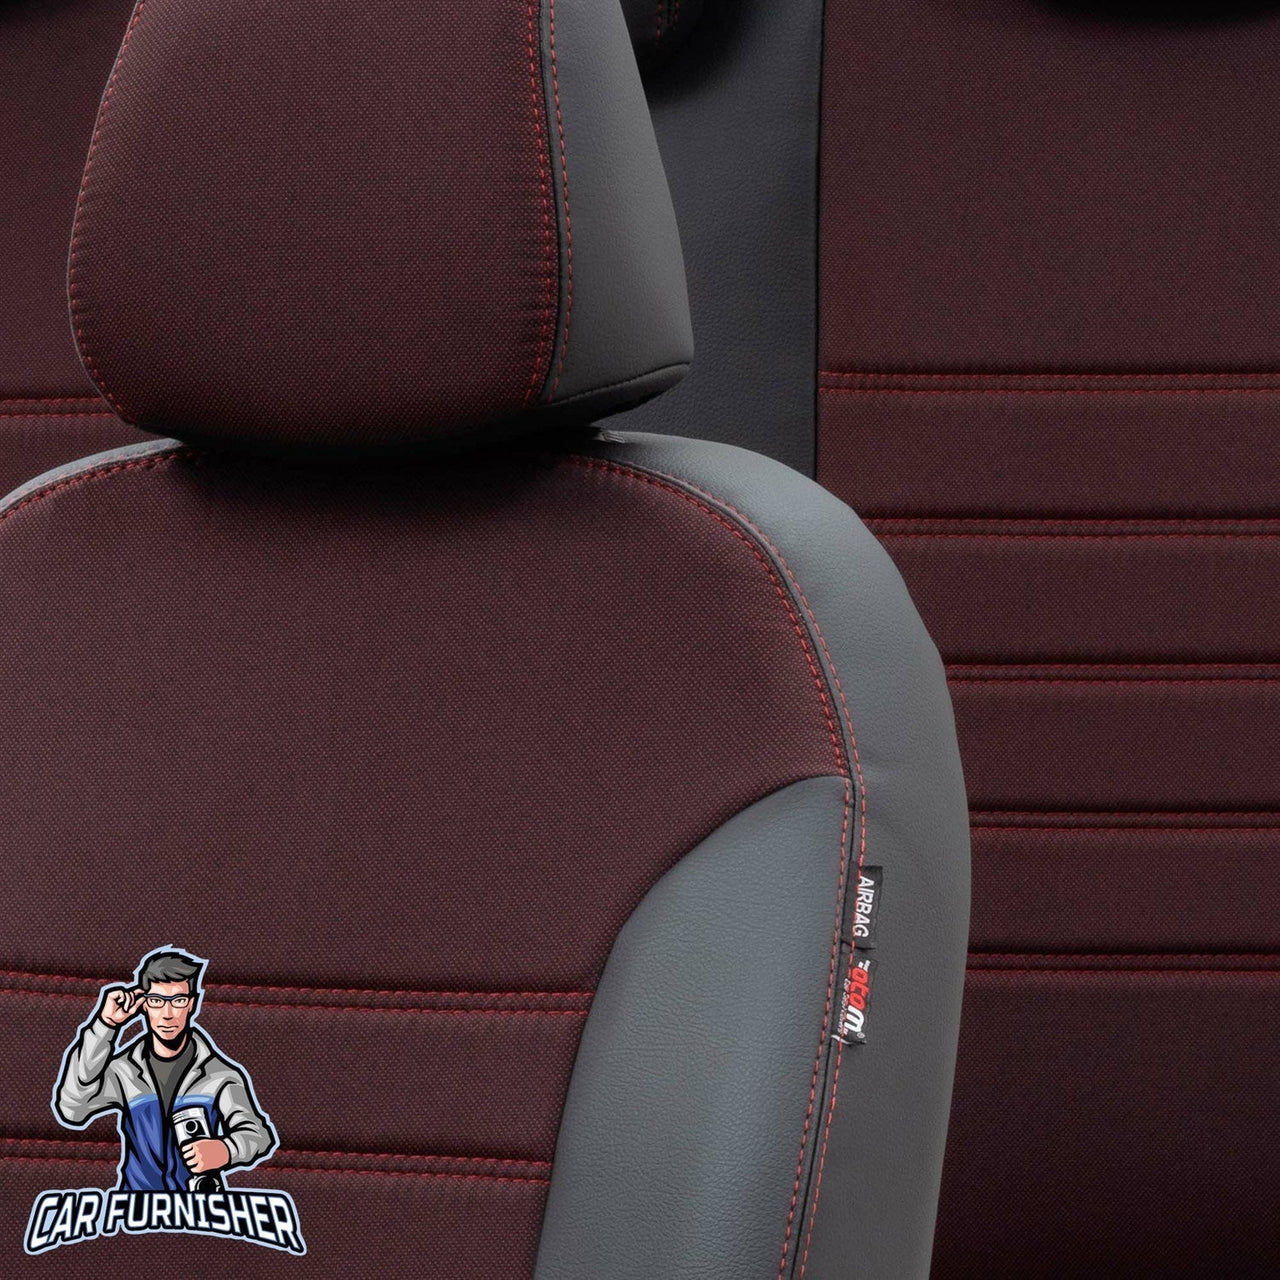 Renault Safrane Seat Covers Paris Leather & Jacquard Design Red Leather & Jacquard Fabric